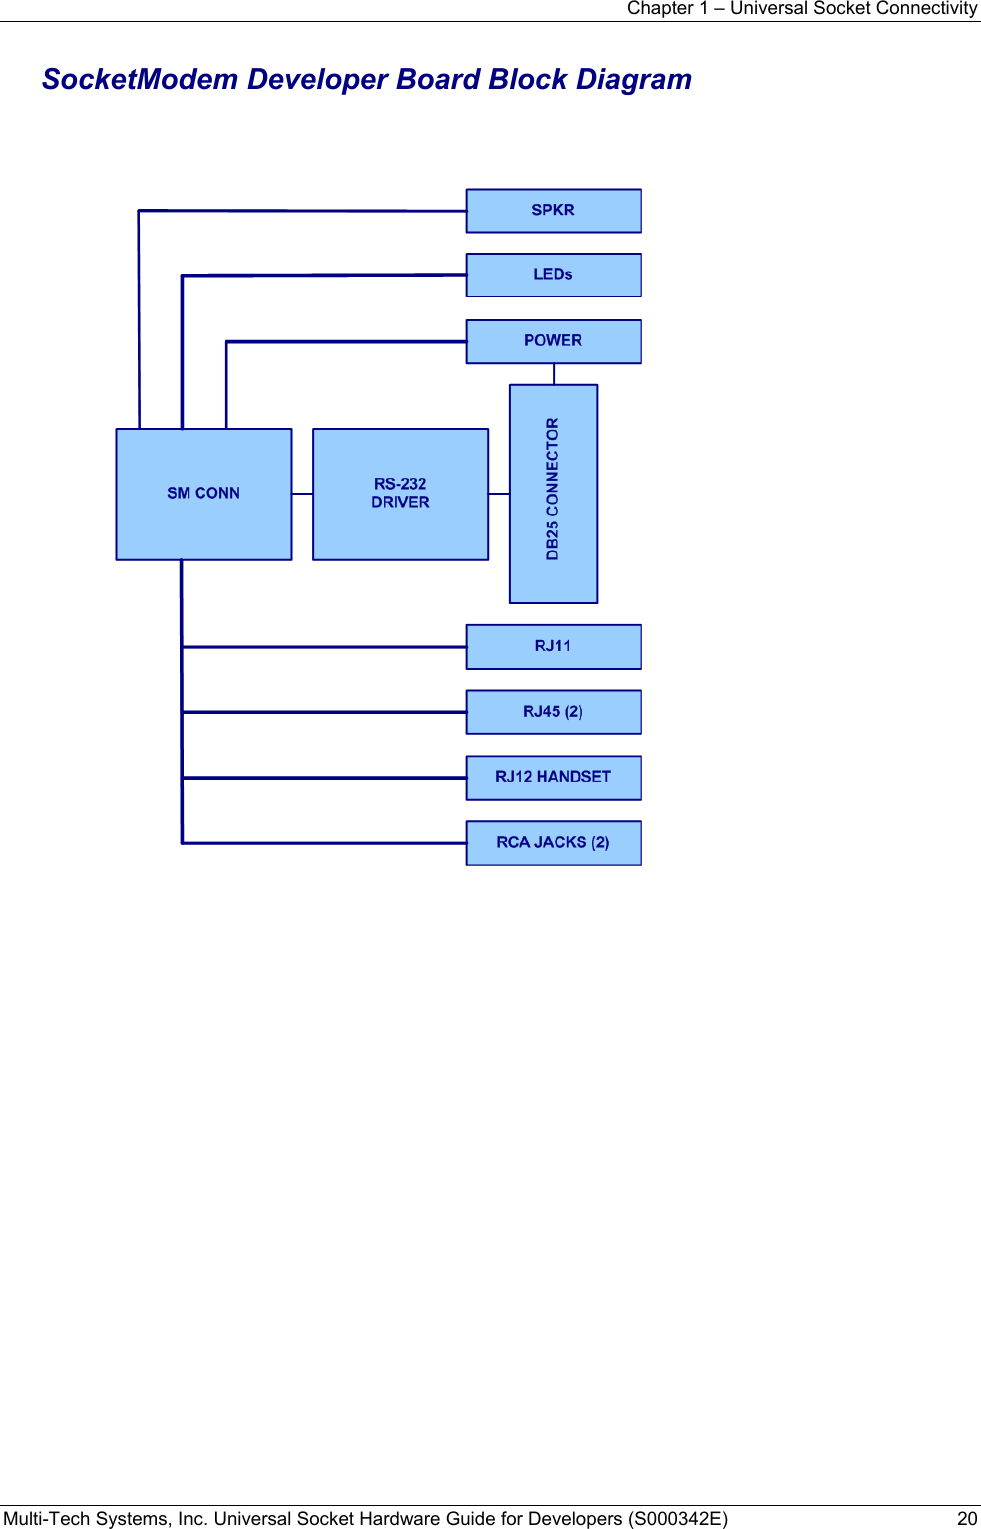 Chapter 1 – Universal Socket Connectivity Multi-Tech Systems, Inc. Universal Socket Hardware Guide for Developers (S000342E)  20  SocketModem Developer Board Block Diagram         